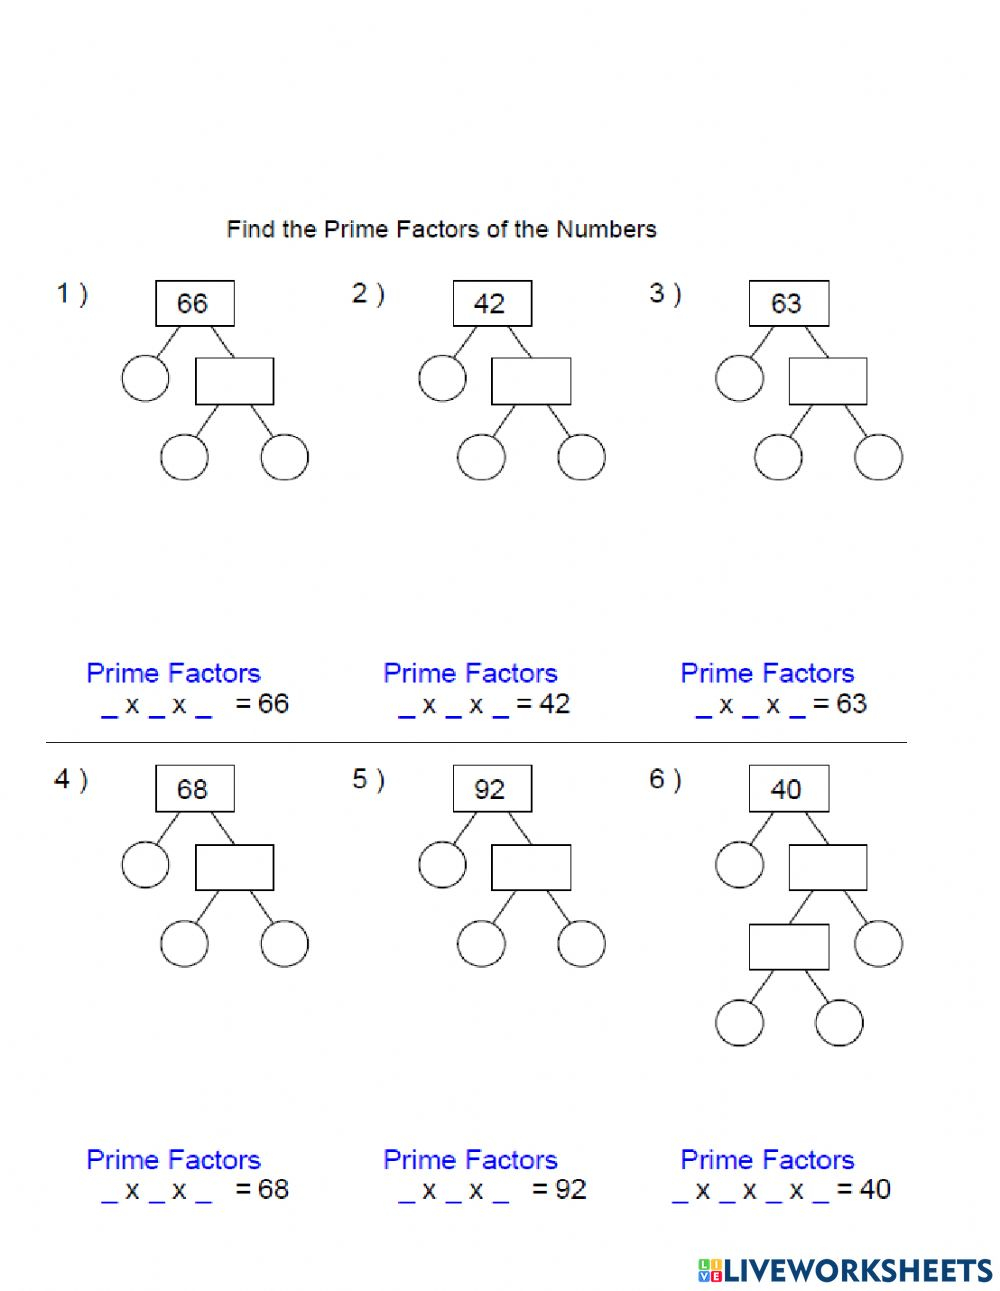 factor-tree-worksheets-tes-factorworksheets